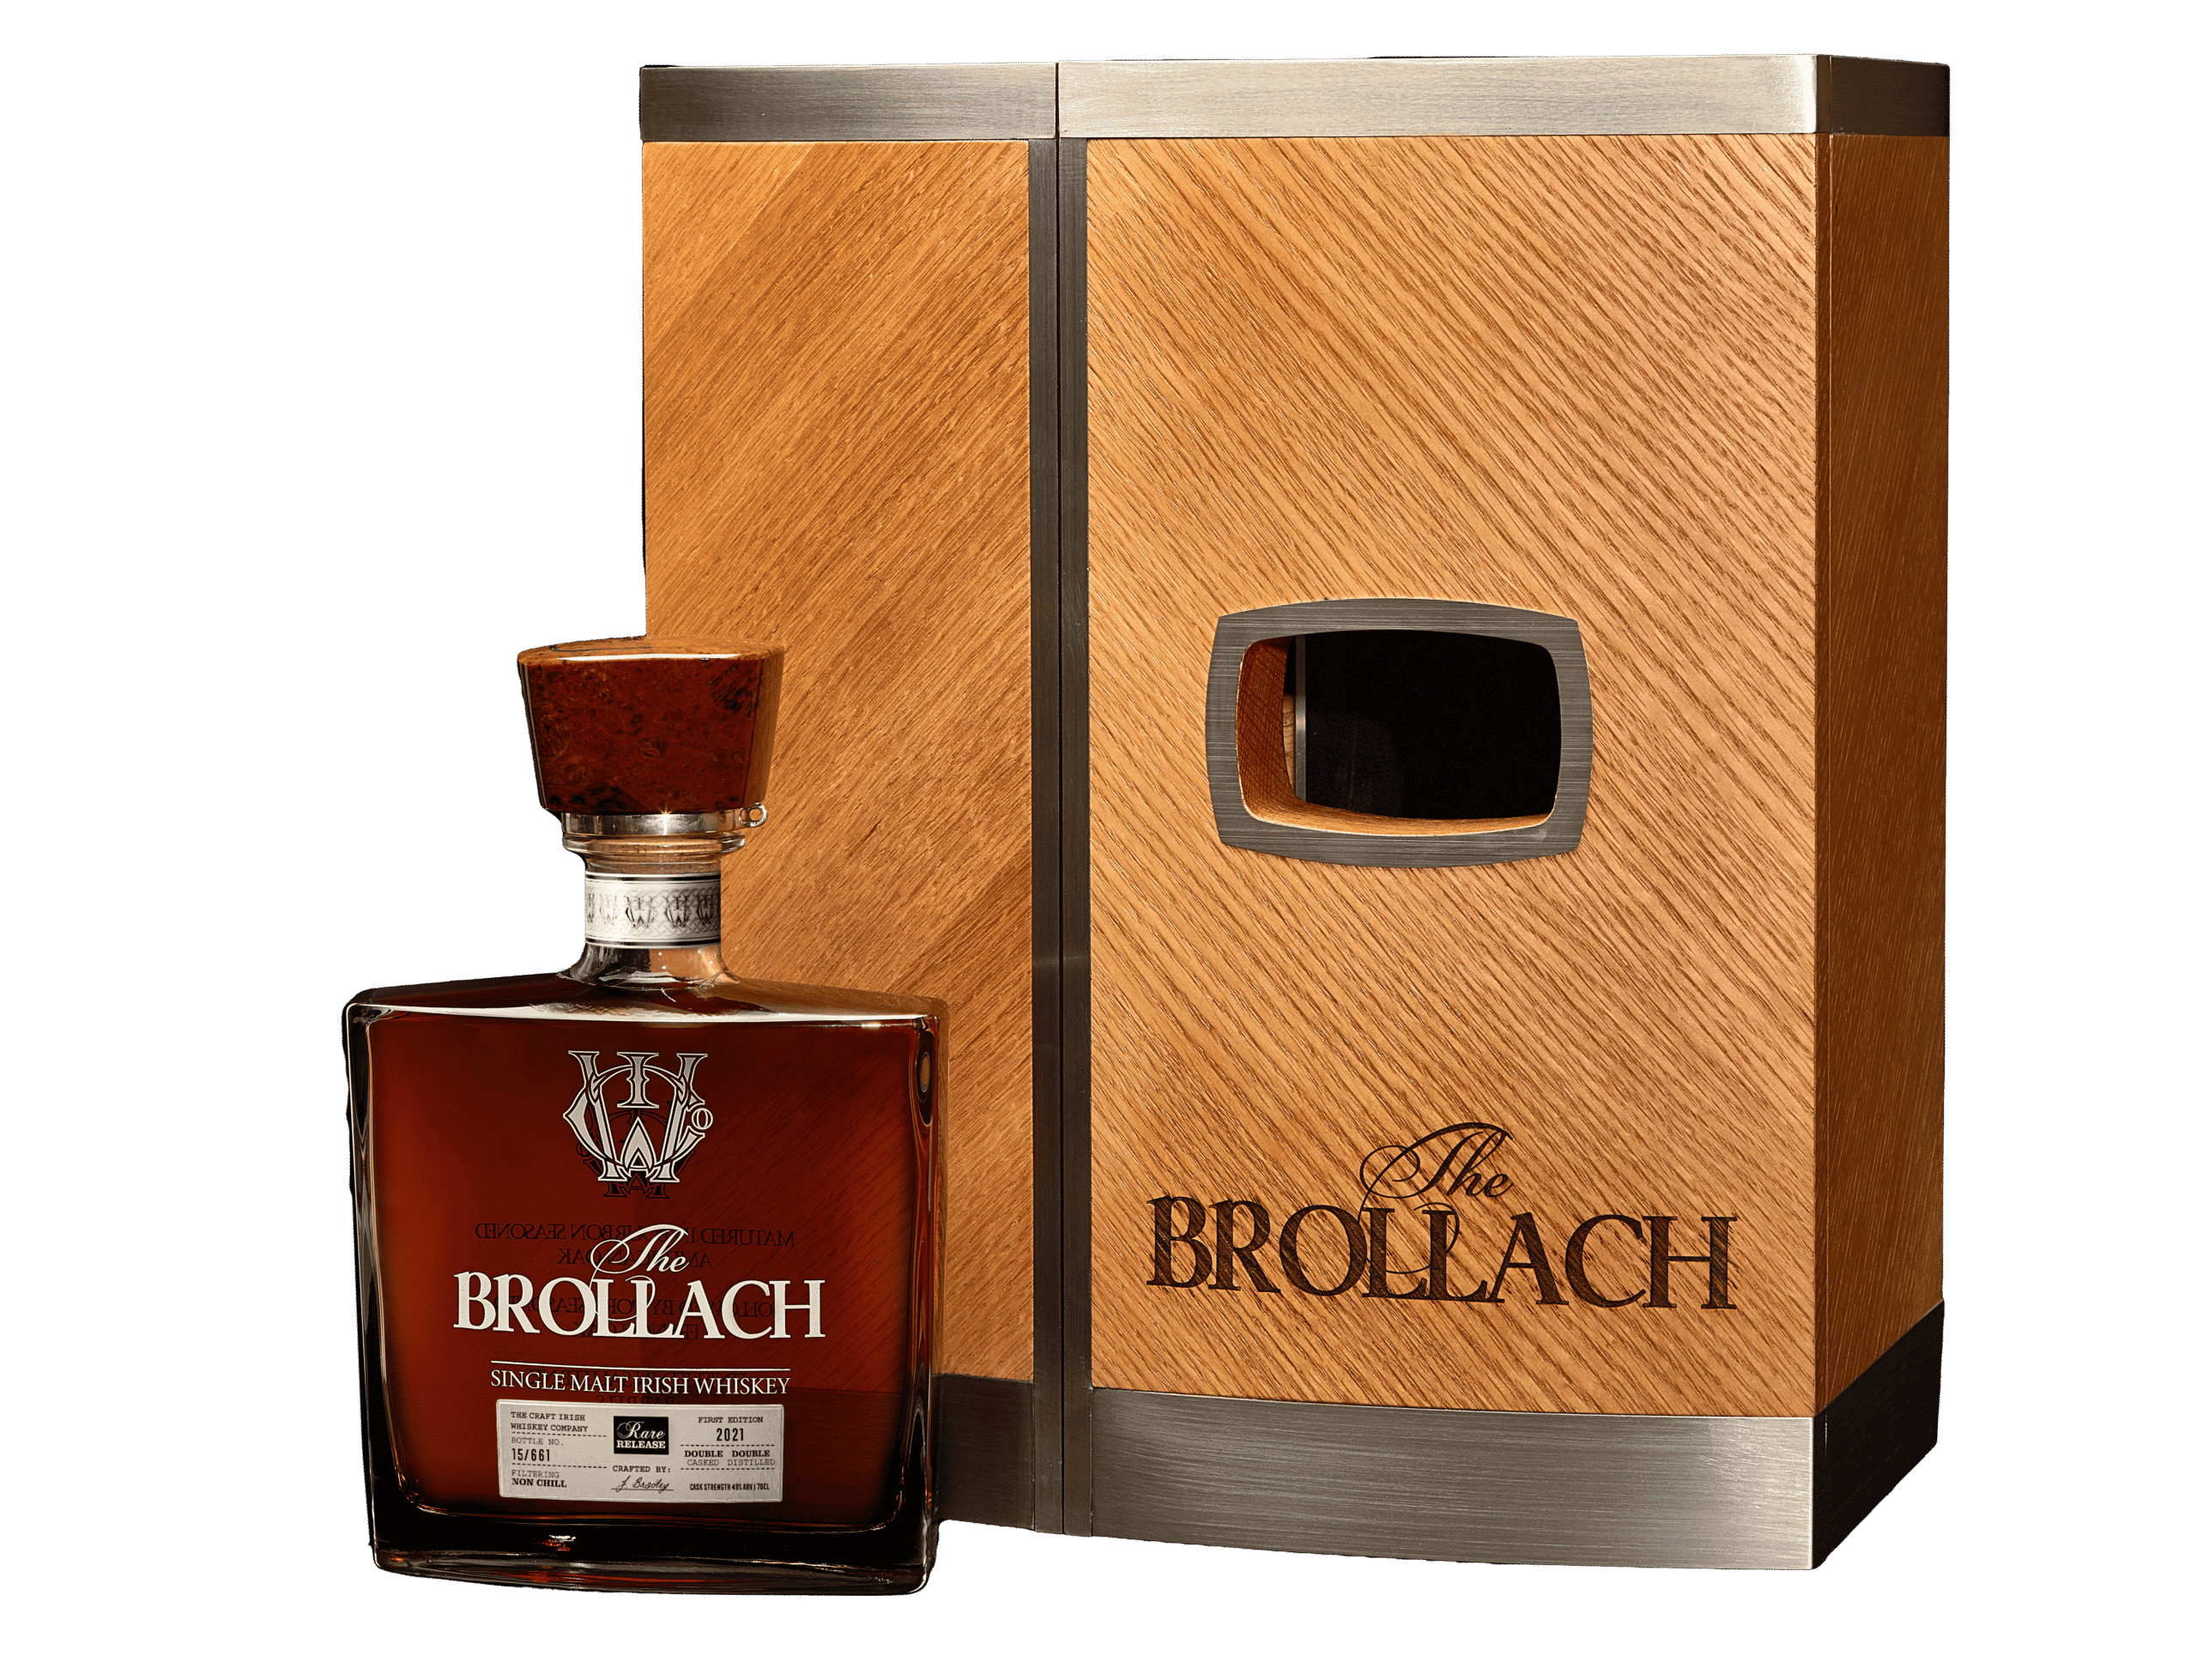 award-winning single malt whiskey, the Brollach